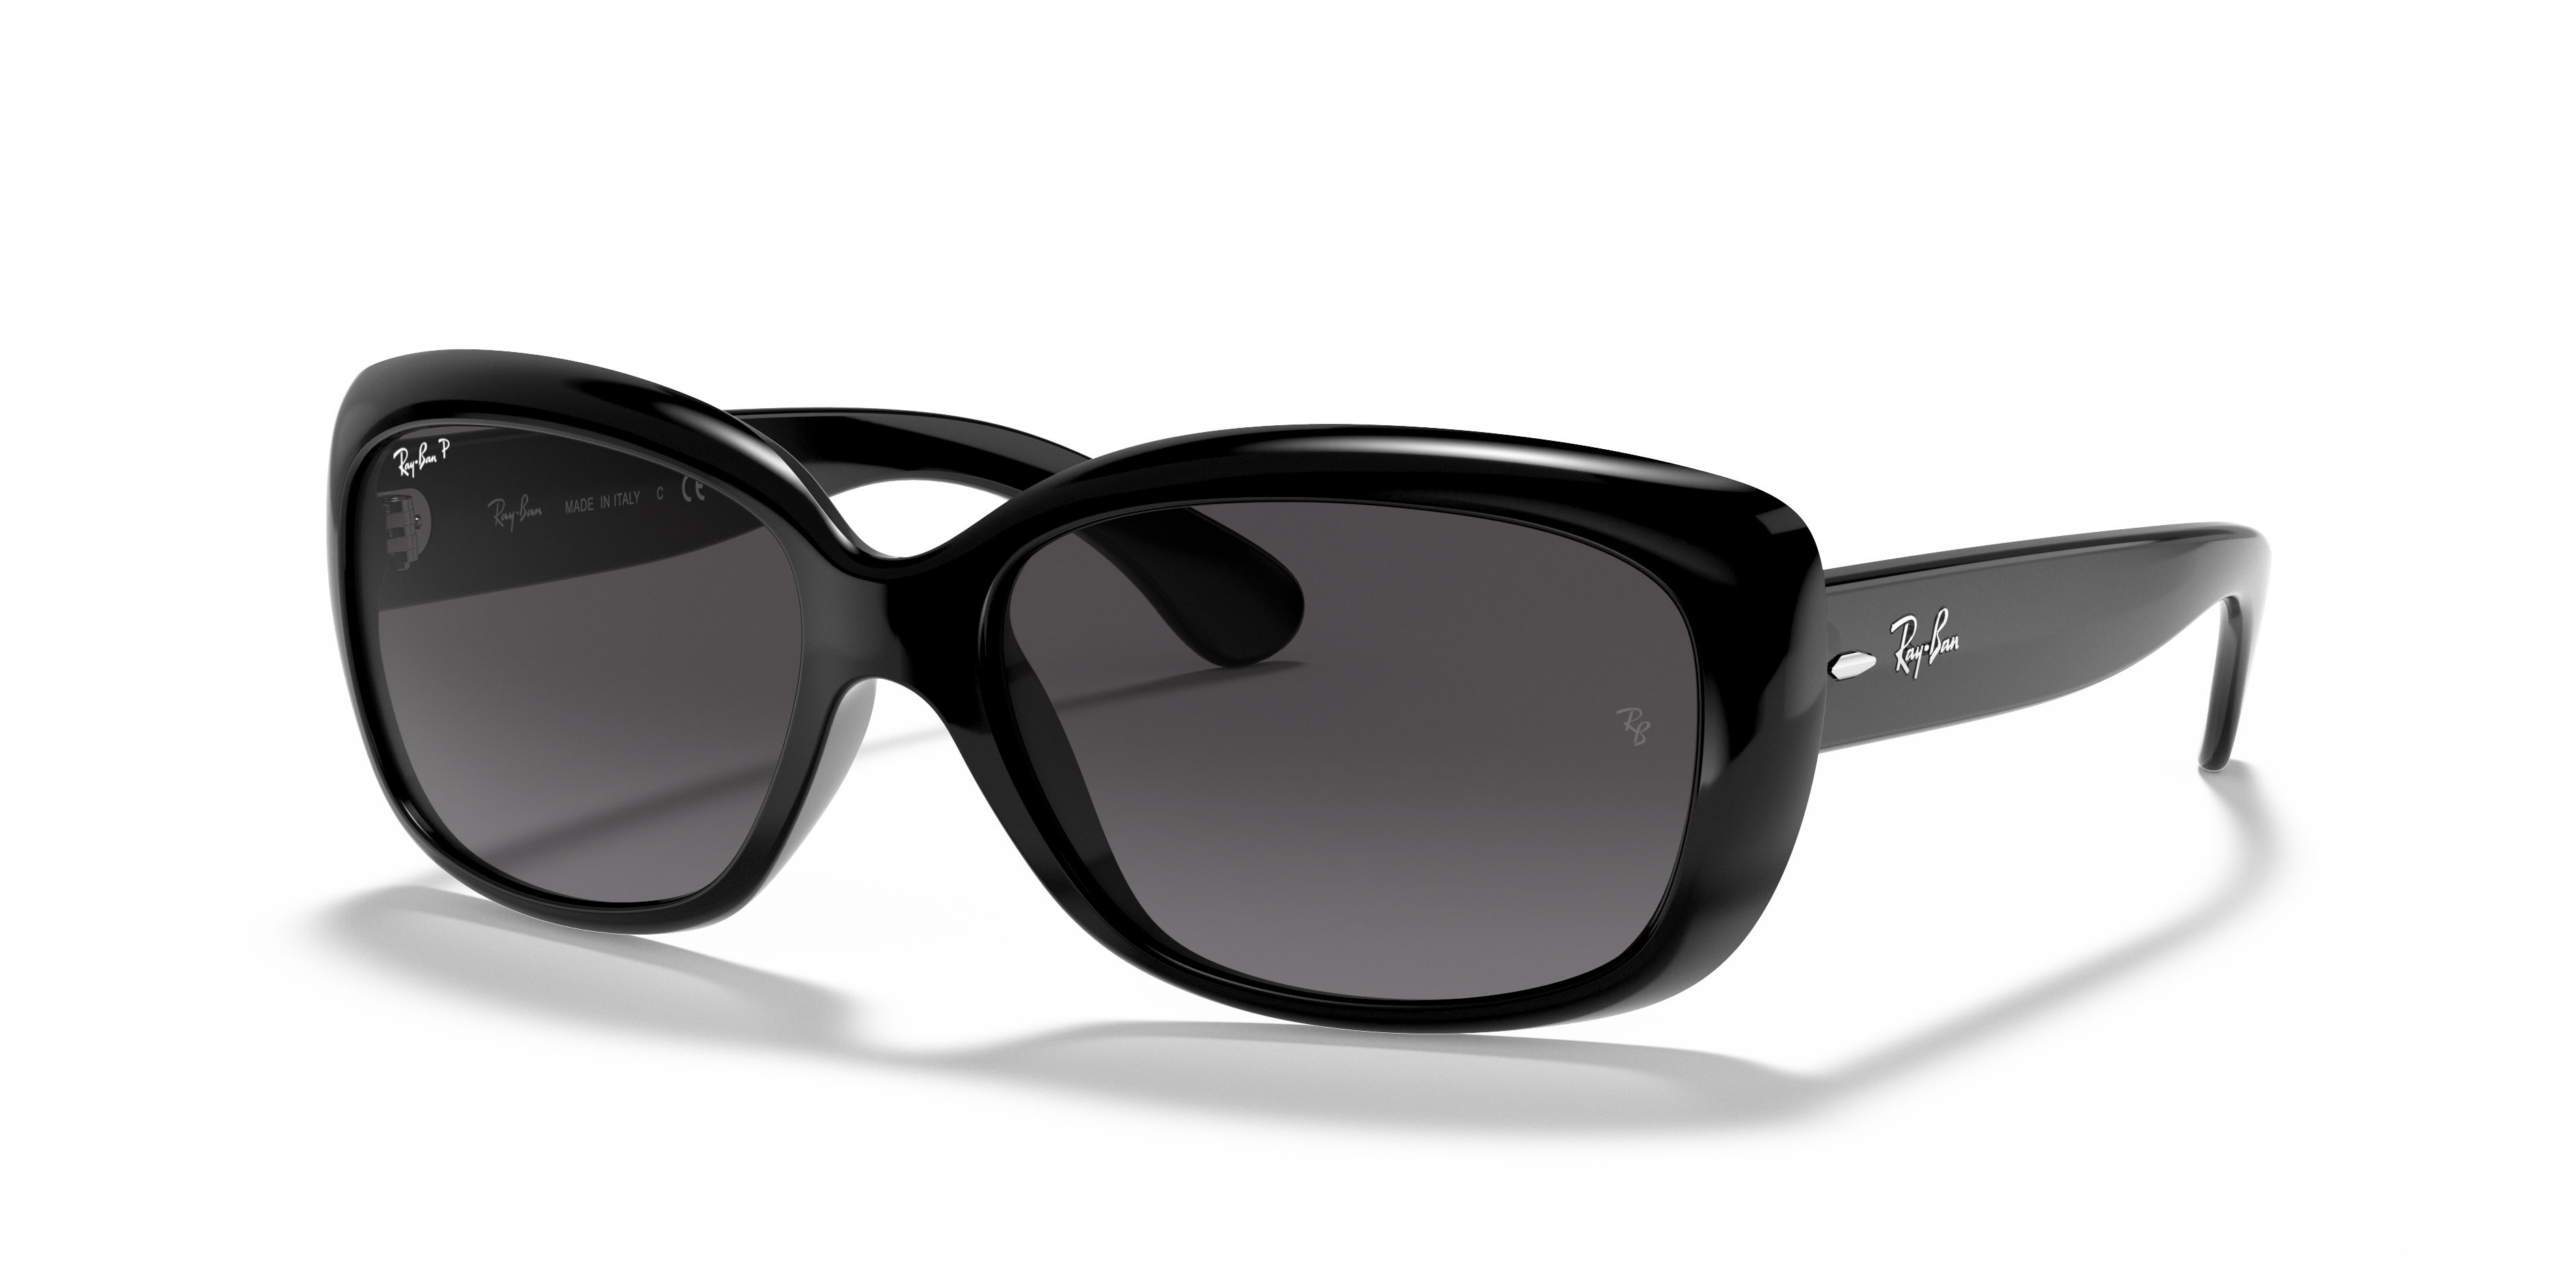 Angle_Left01 Ray-Ban Jackie Ohh RB 4101 (601/T3) Sunglasses Grey / Black